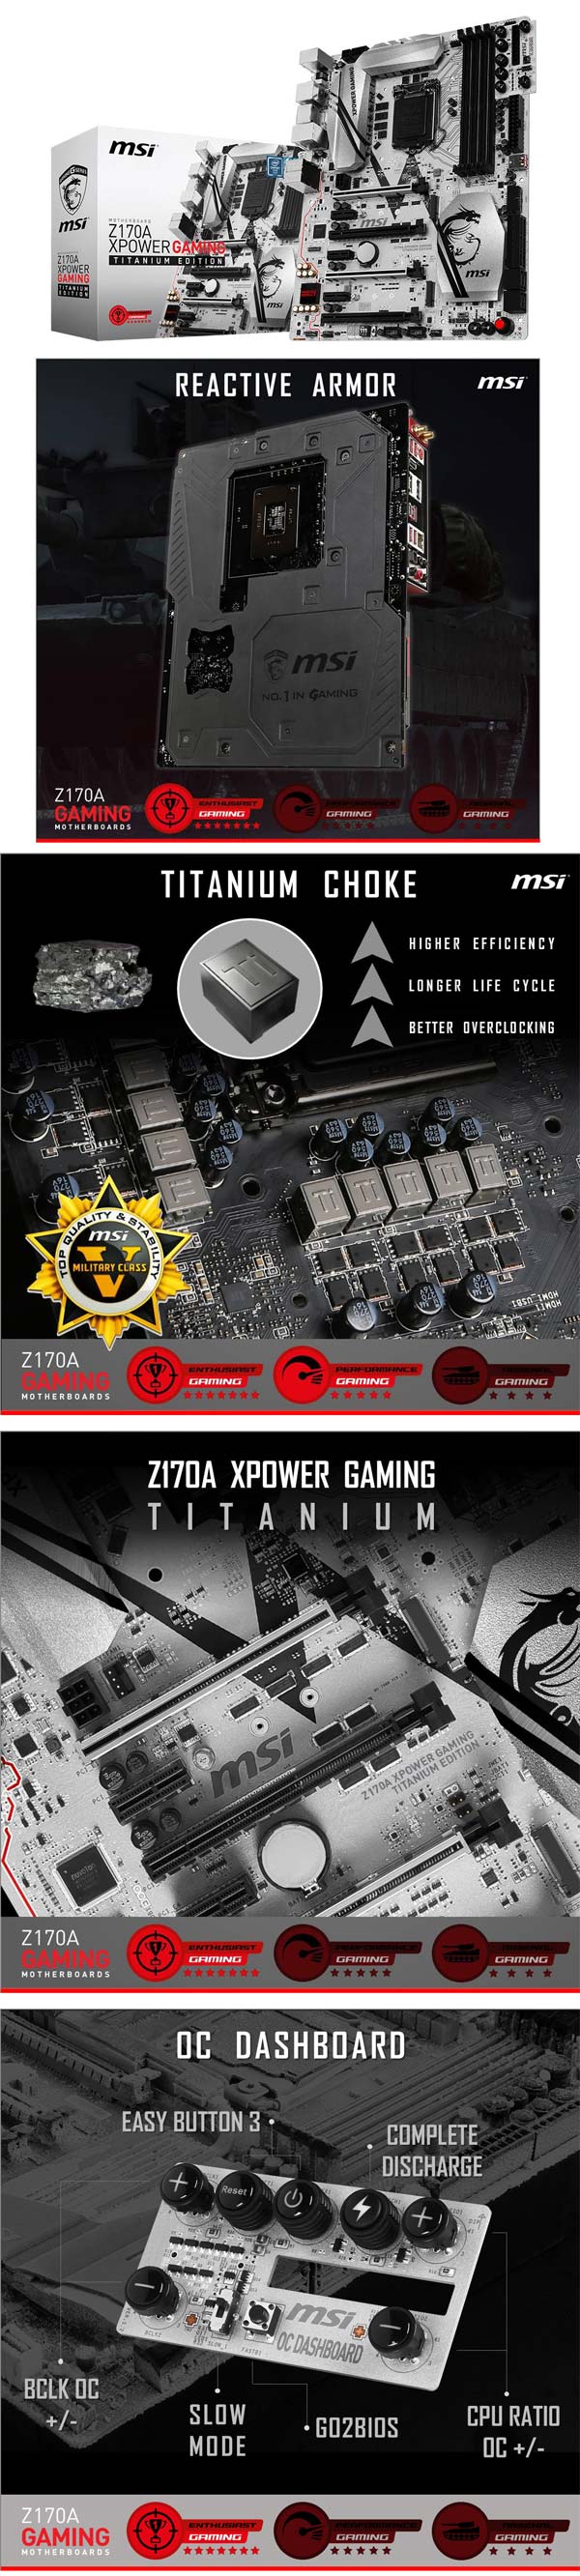 На фото показана системная плата MSI Z170A XPOWER Gaming Titanium Edition